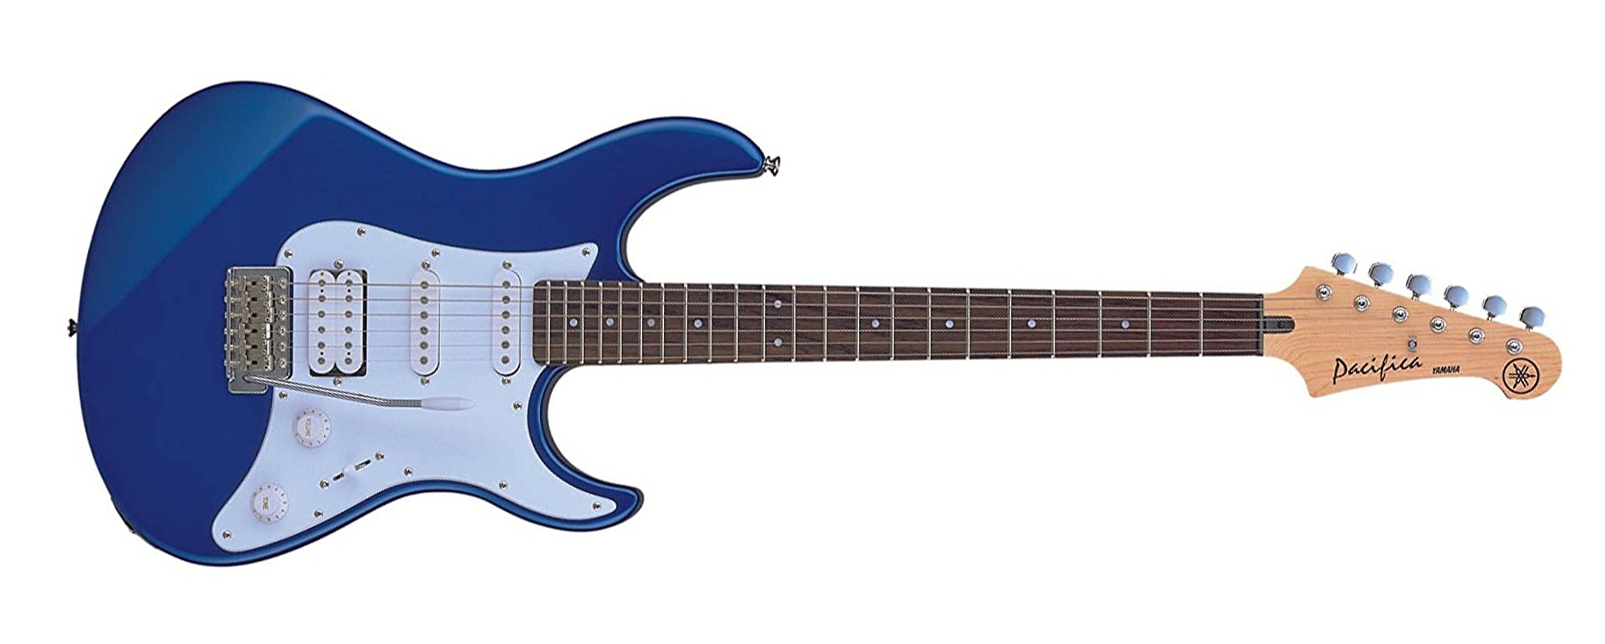 Yamaha PAC012 DBM 6-String RH Pacifica PAC012 Electric Guitar in Deep Blue Metallic